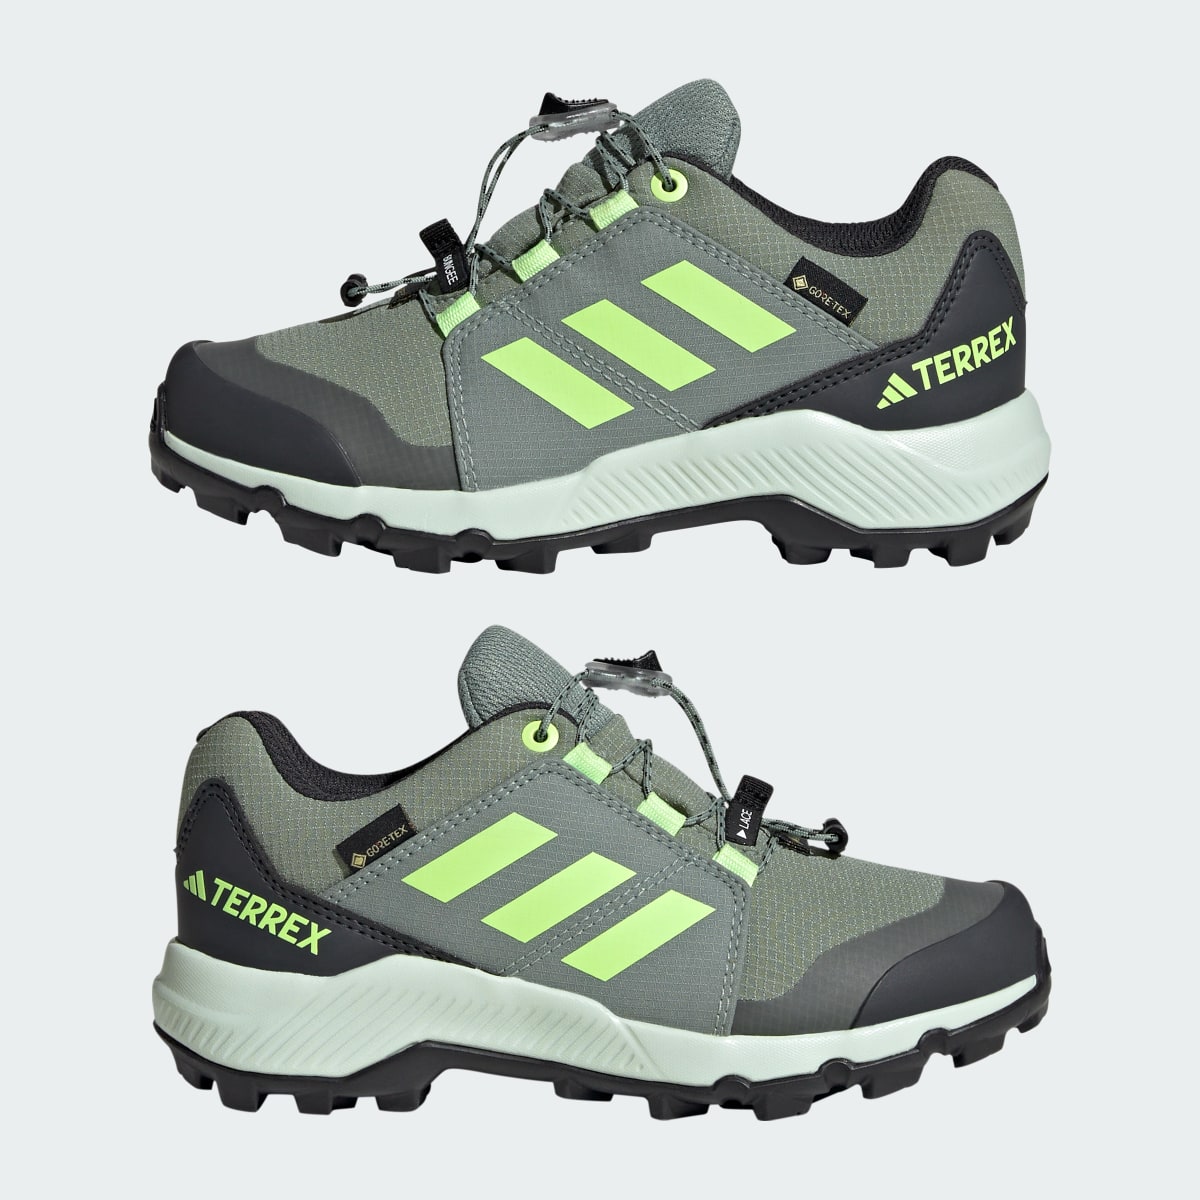 Adidas Terrex GORE-TEX Hiking Shoes. 8